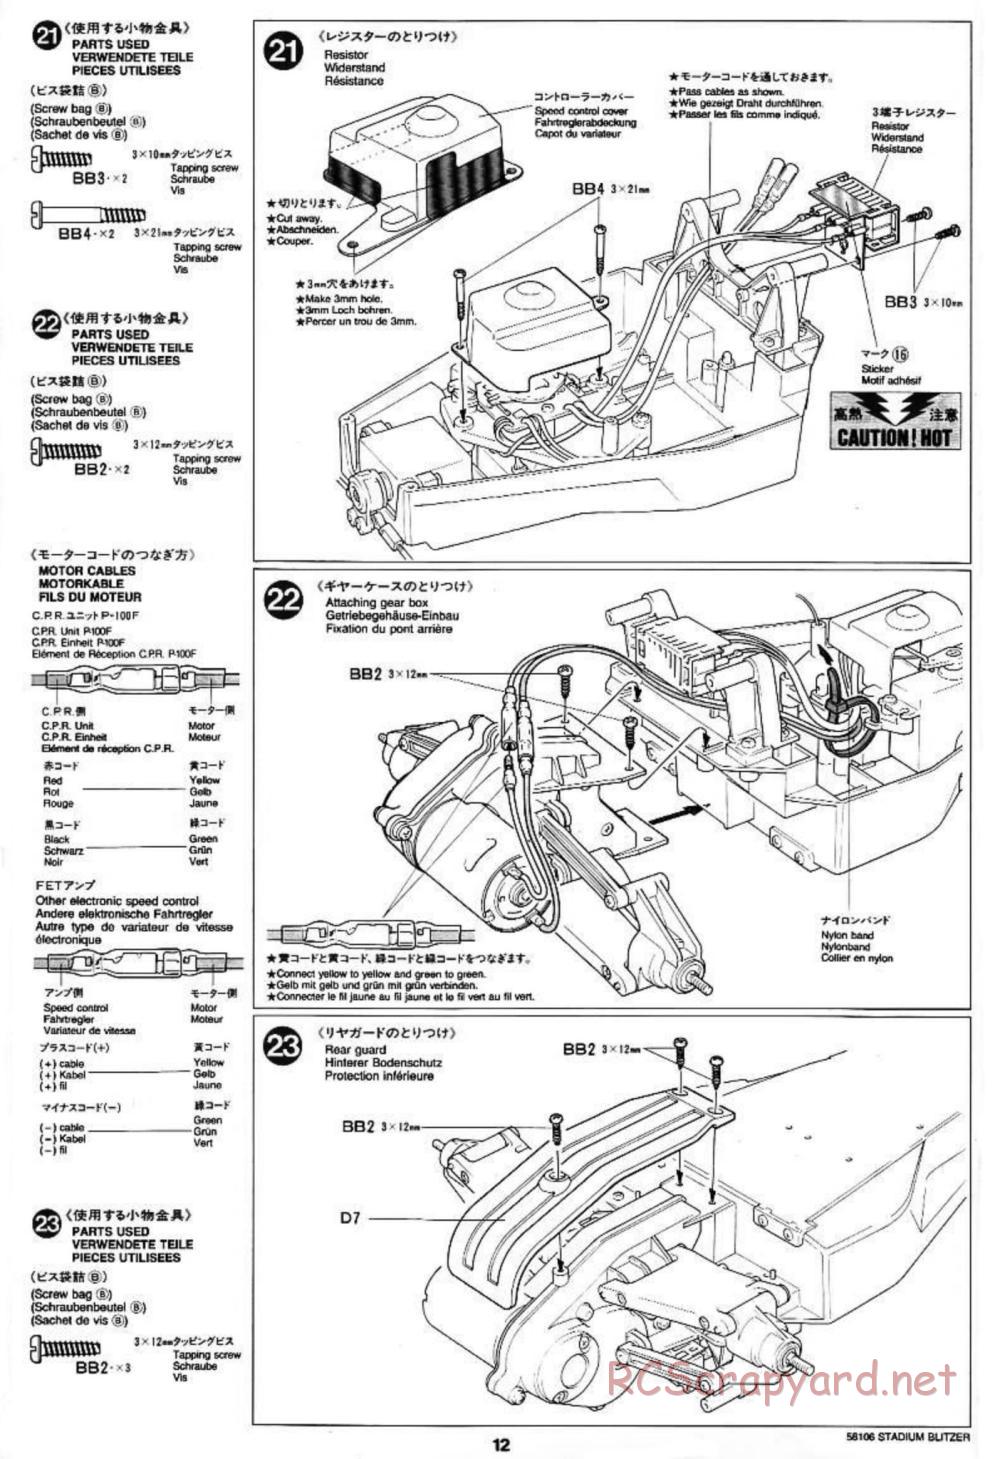 Tamiya - Stadium Blitzer Chassis - Manual - Page 12